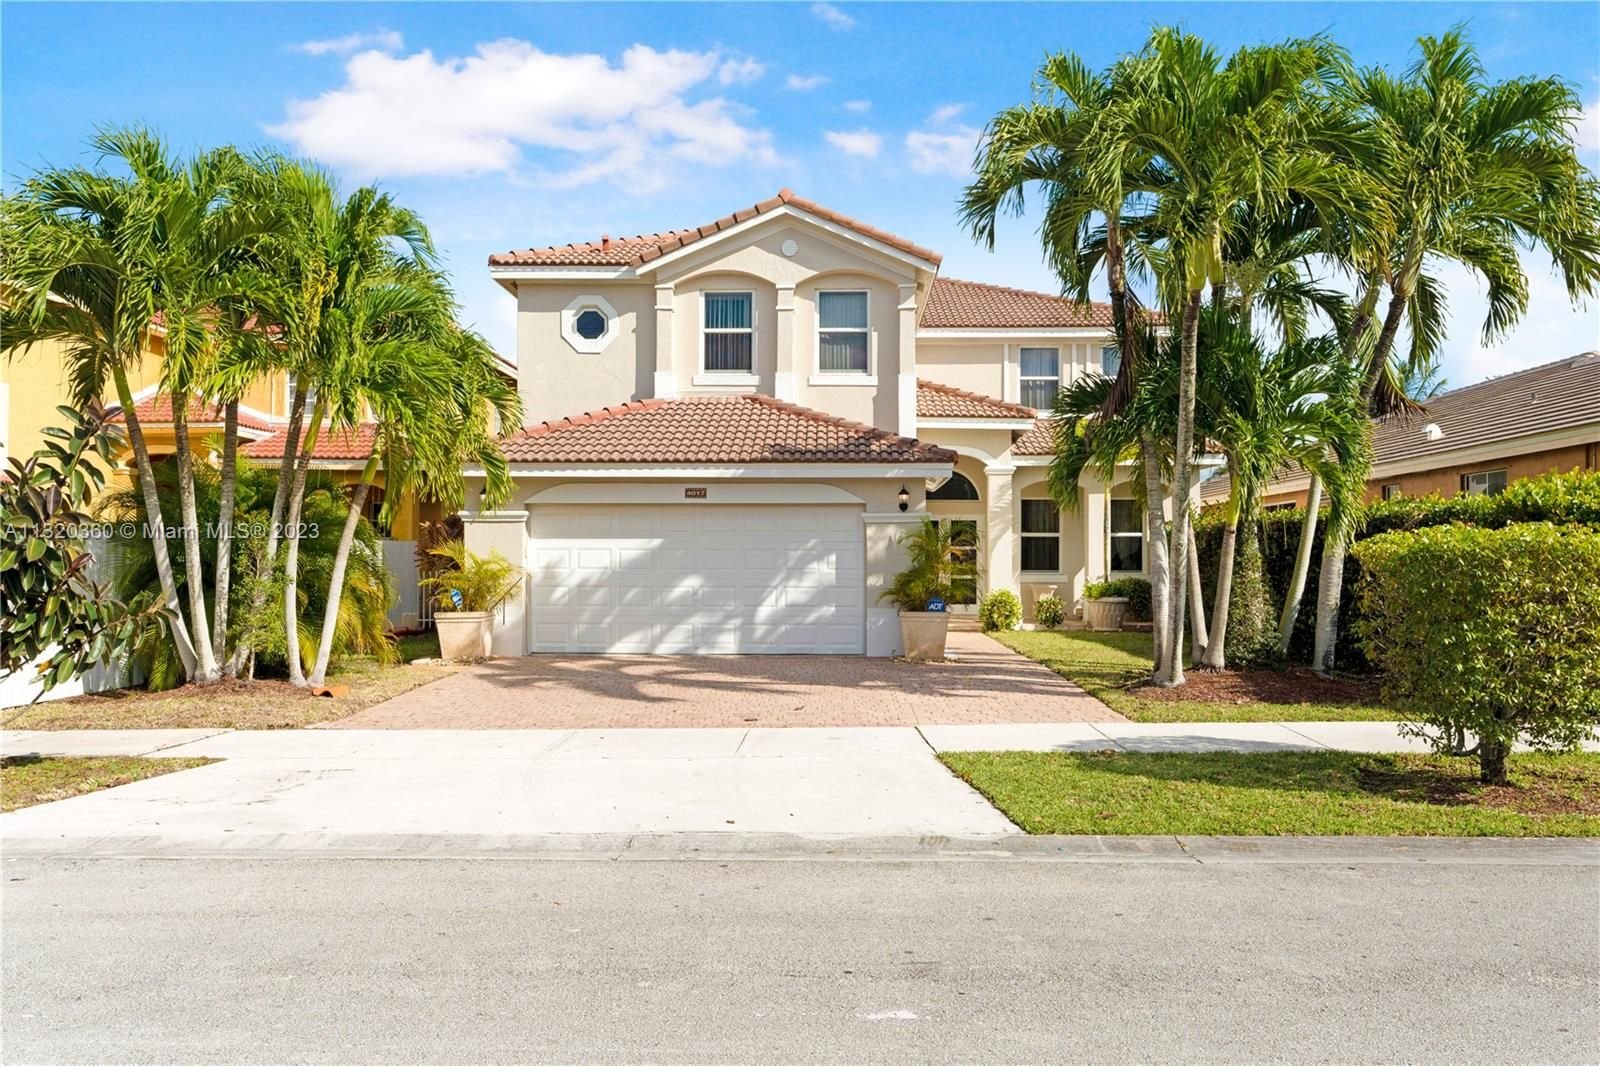 Real estate property located at 4017 156th Ct, Miami-Dade County, Miami, FL